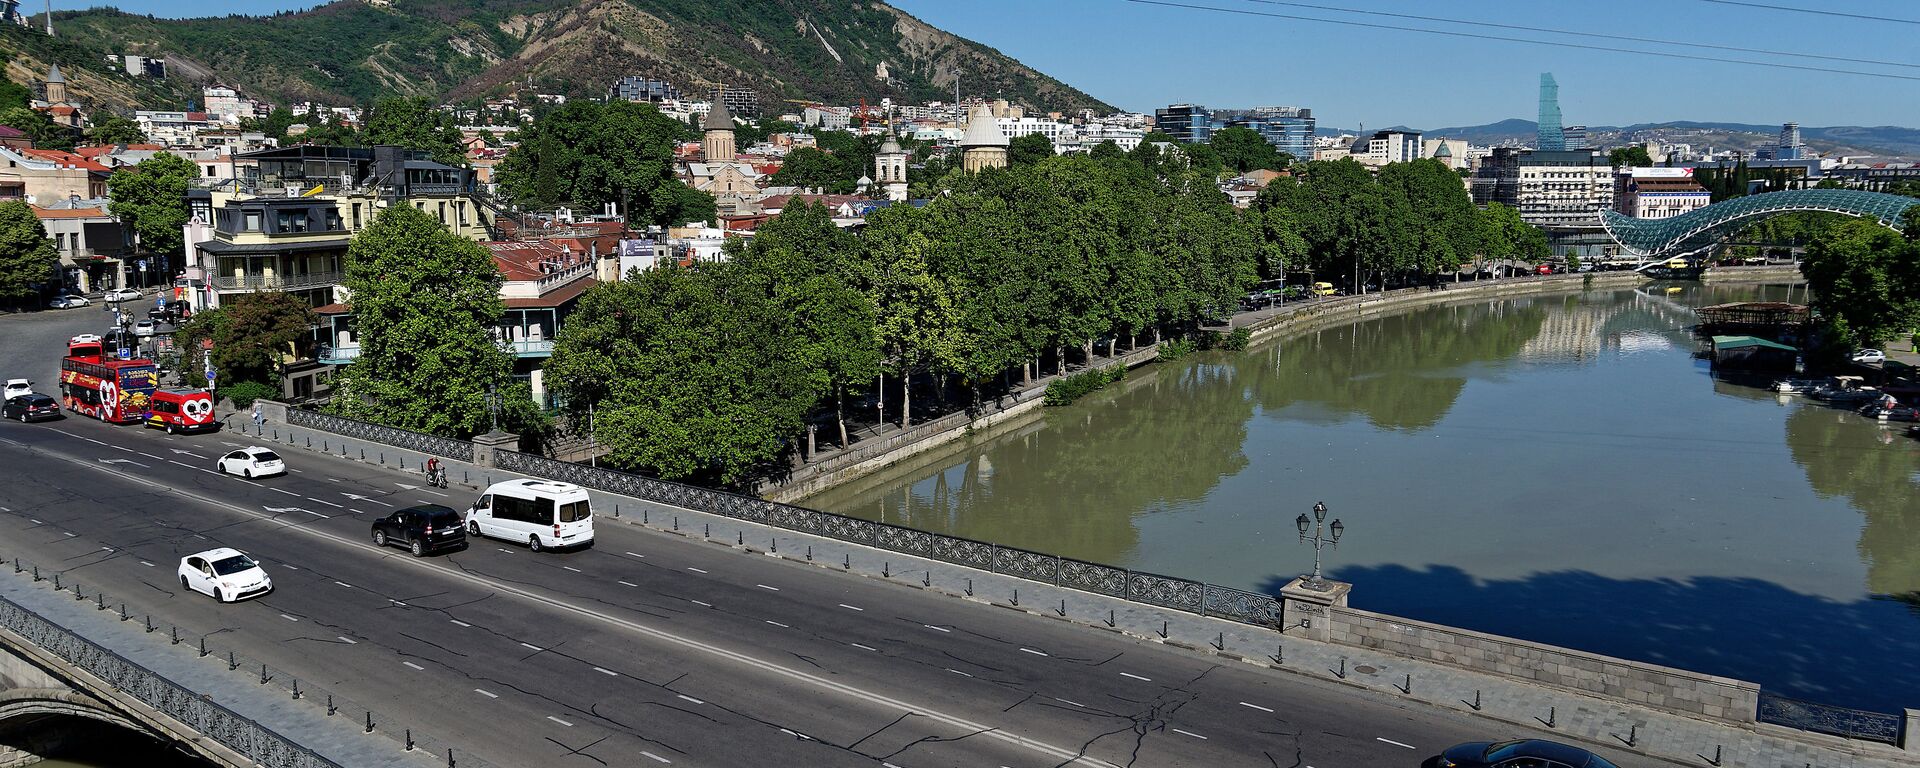 Вид на город Тбилиси - Метехский мост, набережная, река Кура, Мтацминда - Sputnik Грузия, 1920, 01.06.2021